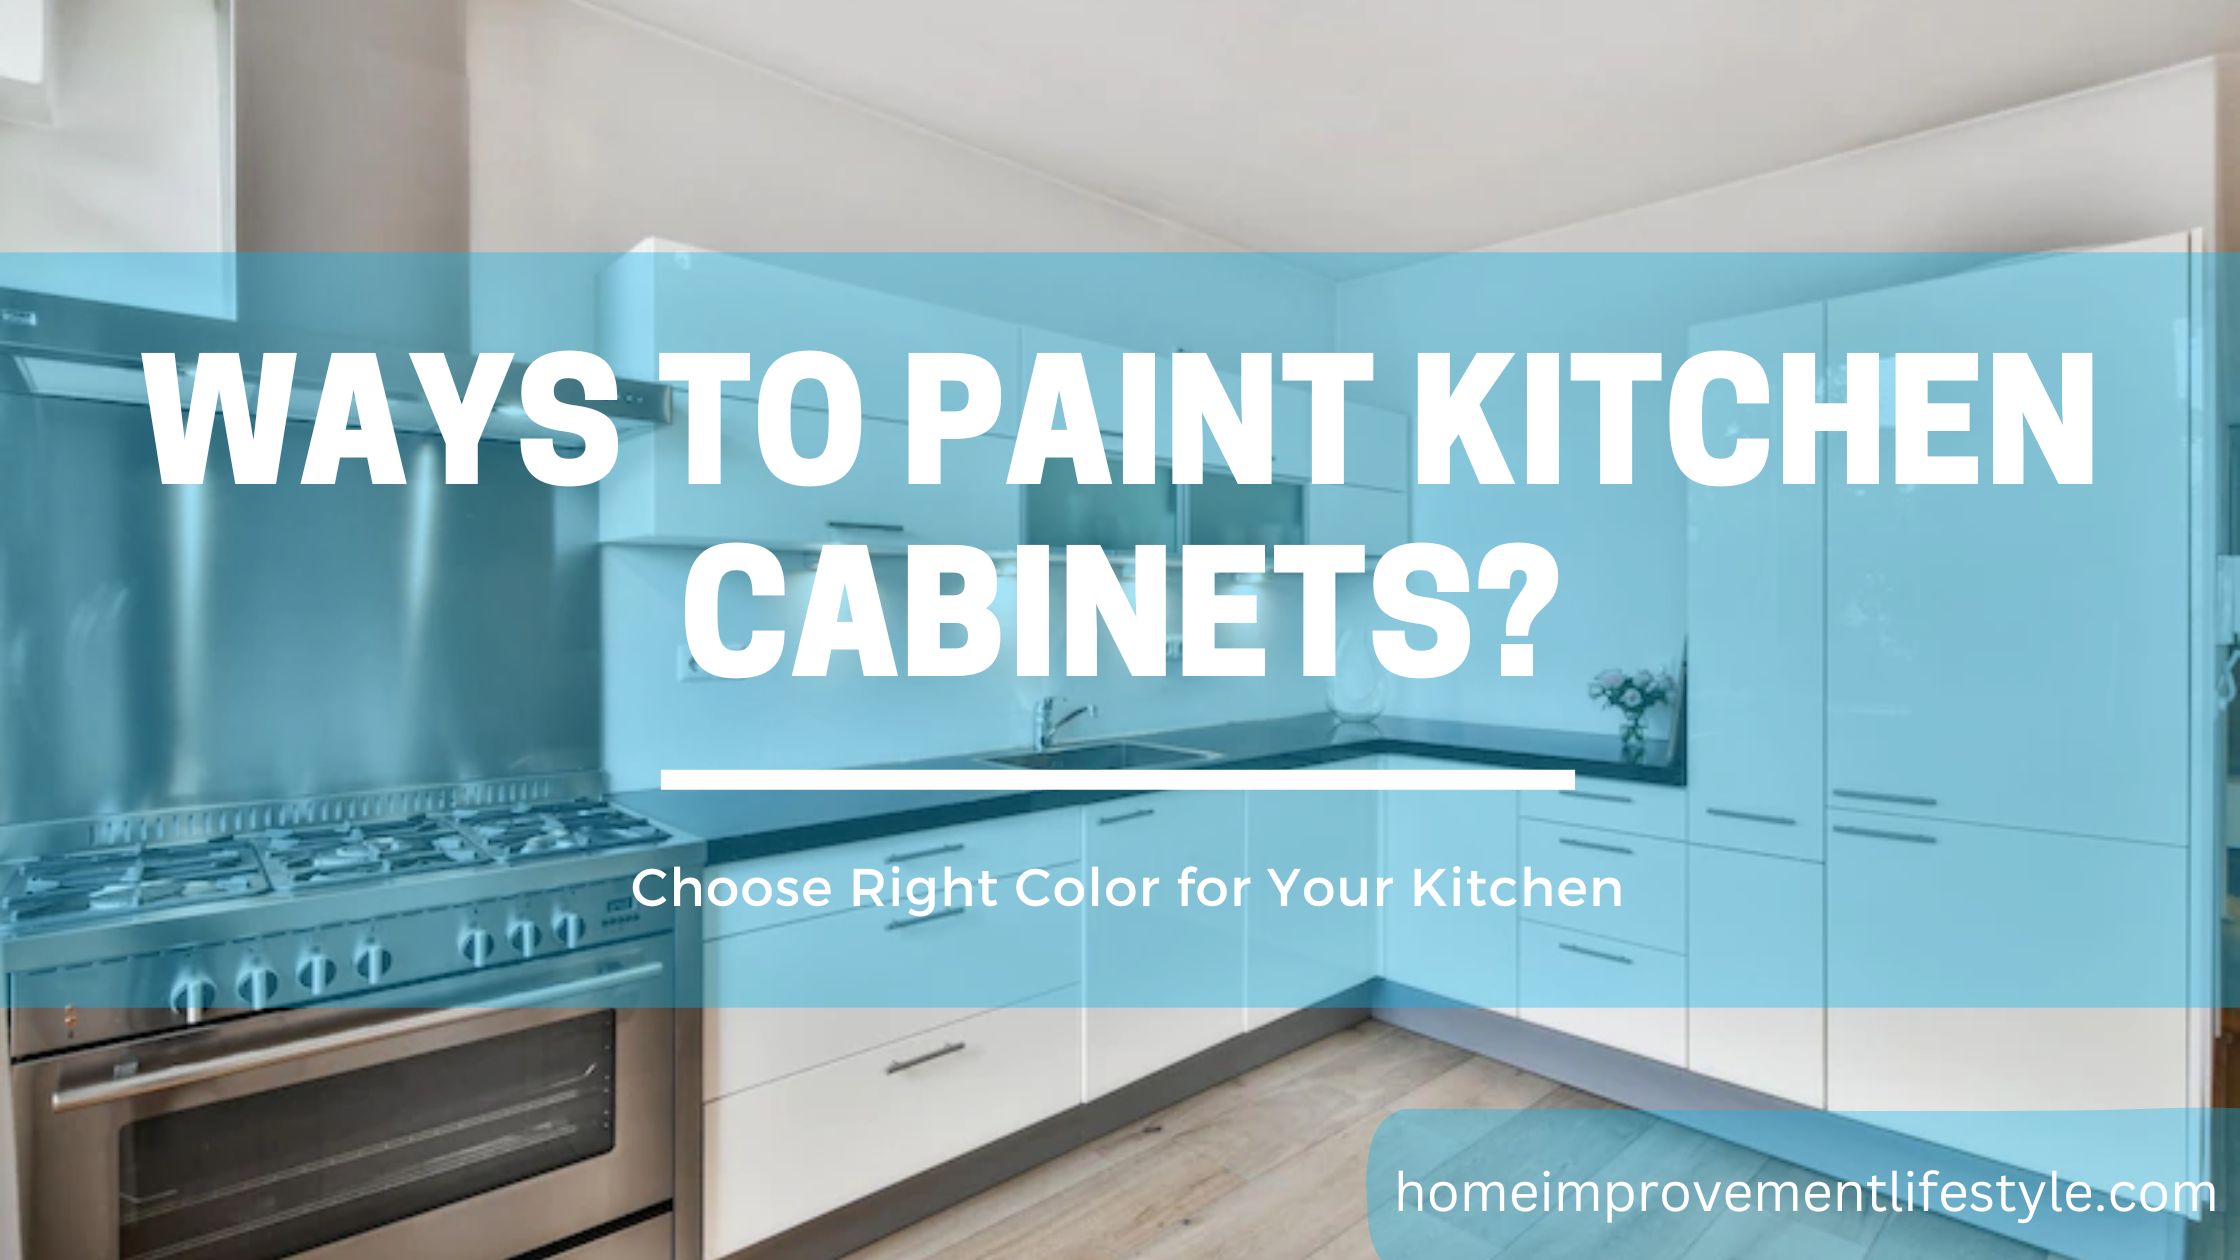 Ways to Paint Kitchen Cabinets